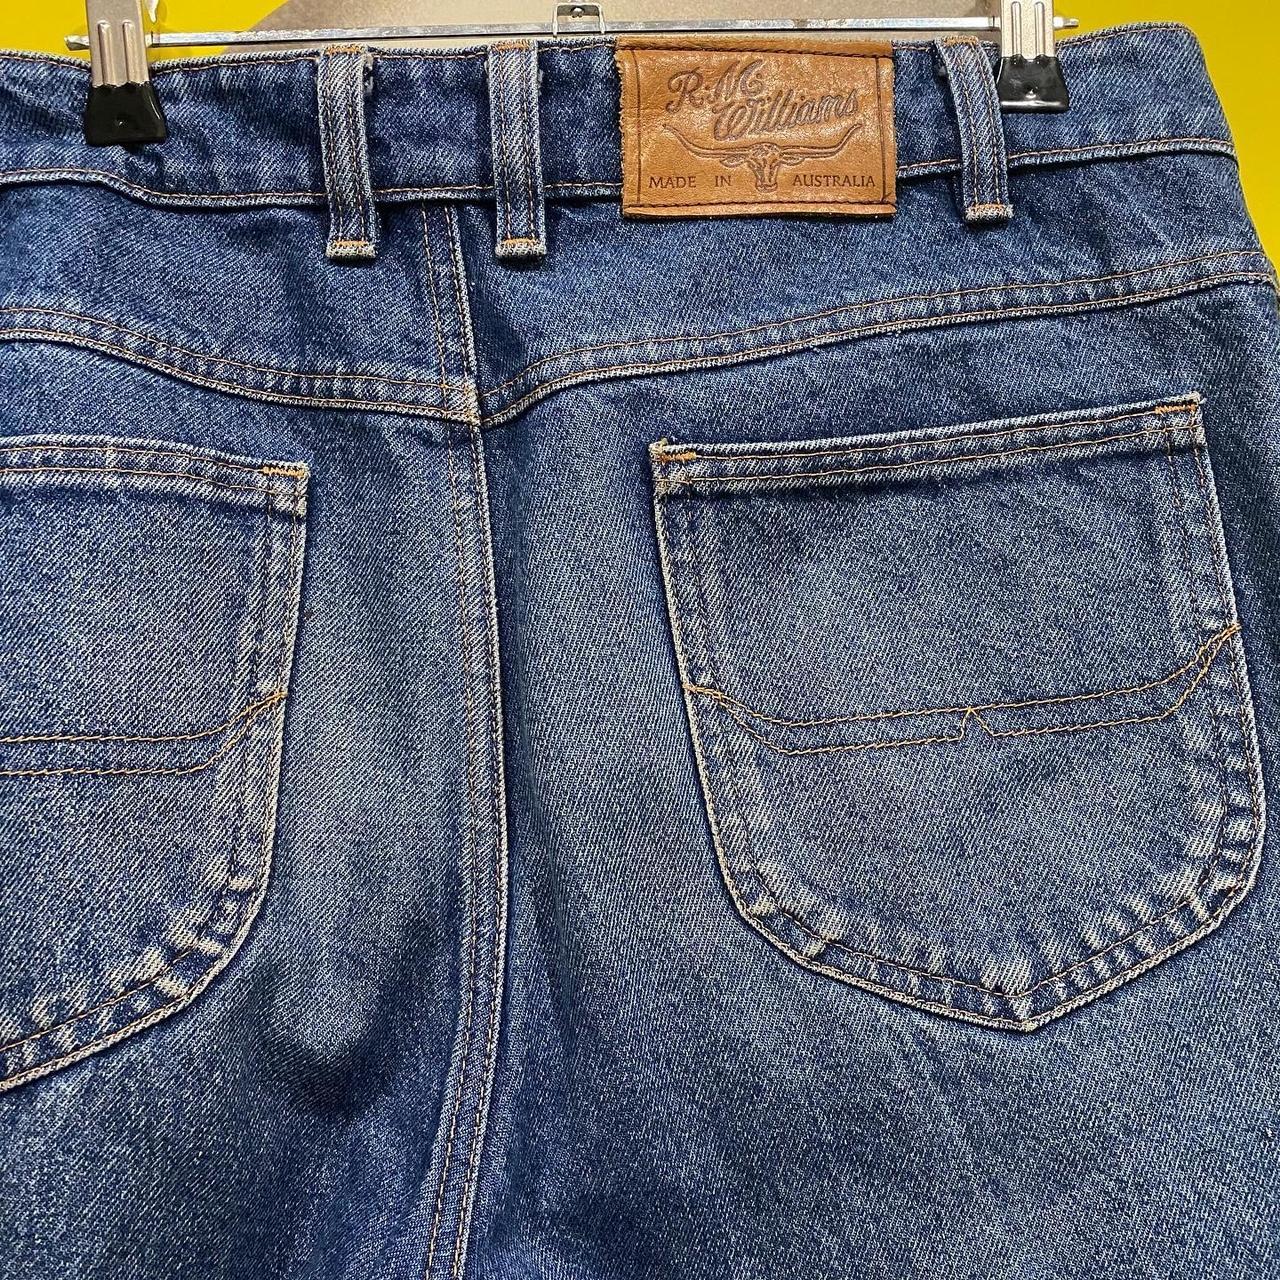 Vintage RM Williams denim jeans 36 x 32 $50... - Depop